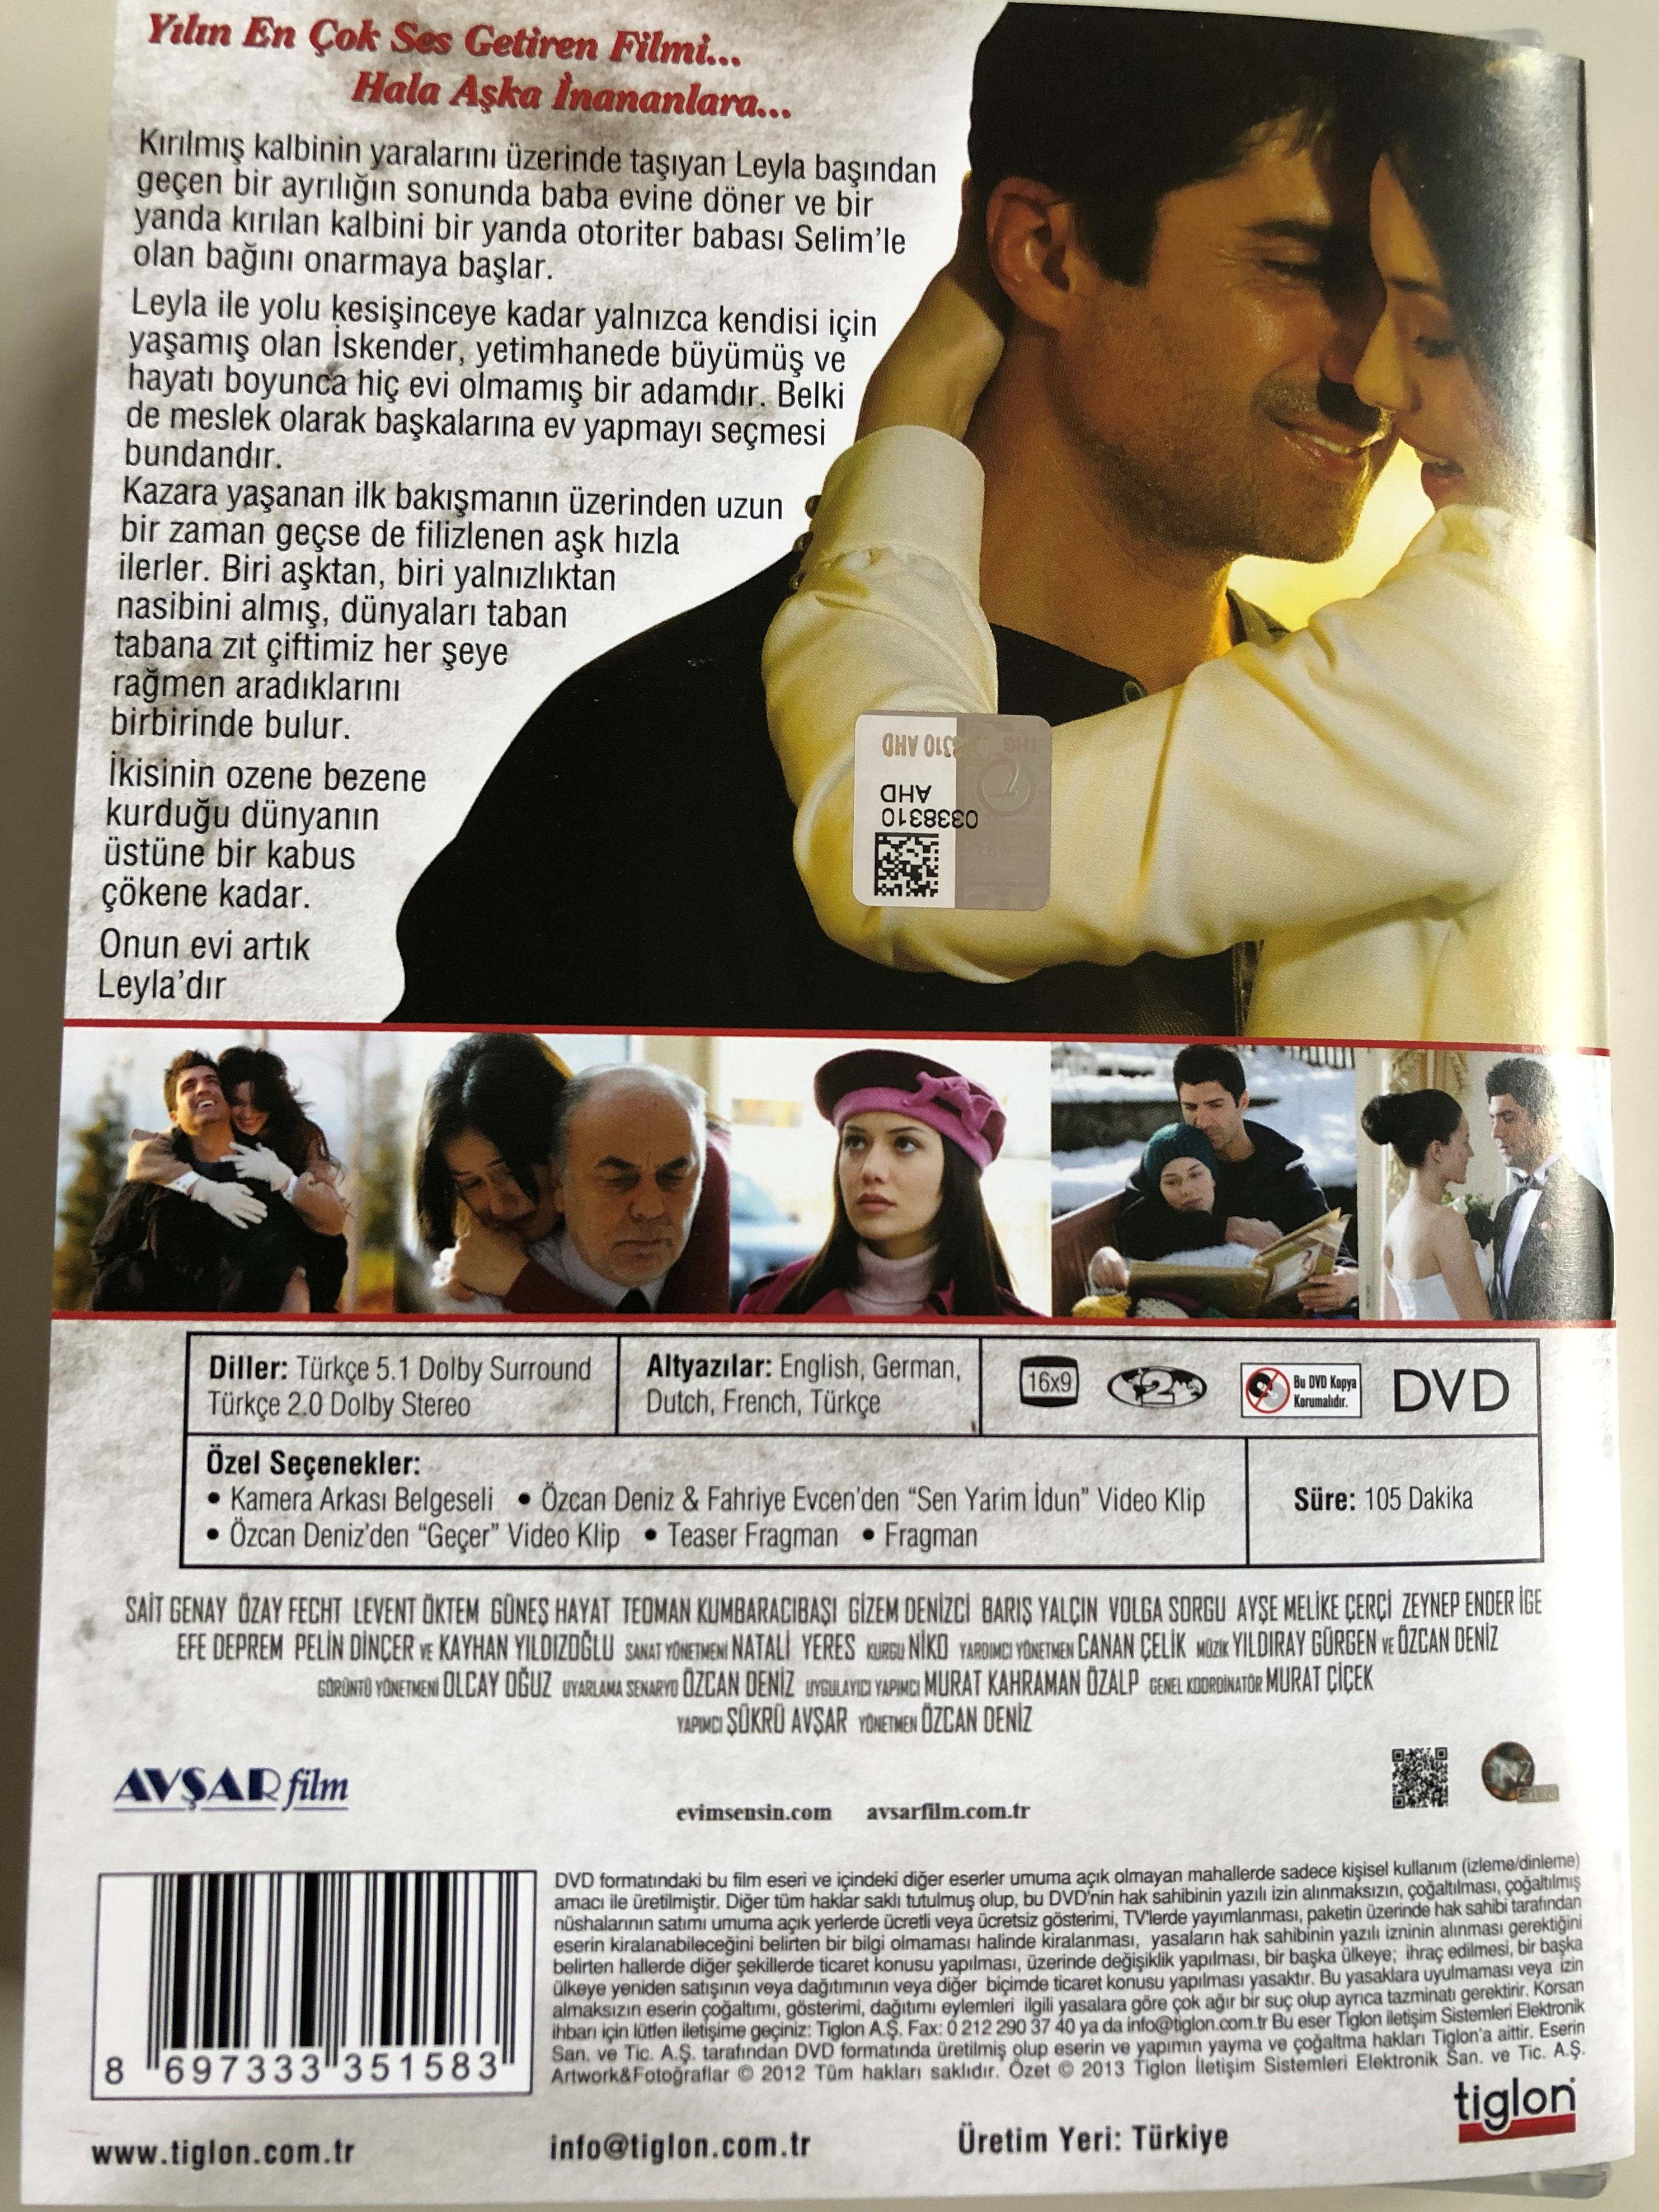 evim-sensin-dvd-2012-directed-by-zcan-deniz-2.jpg